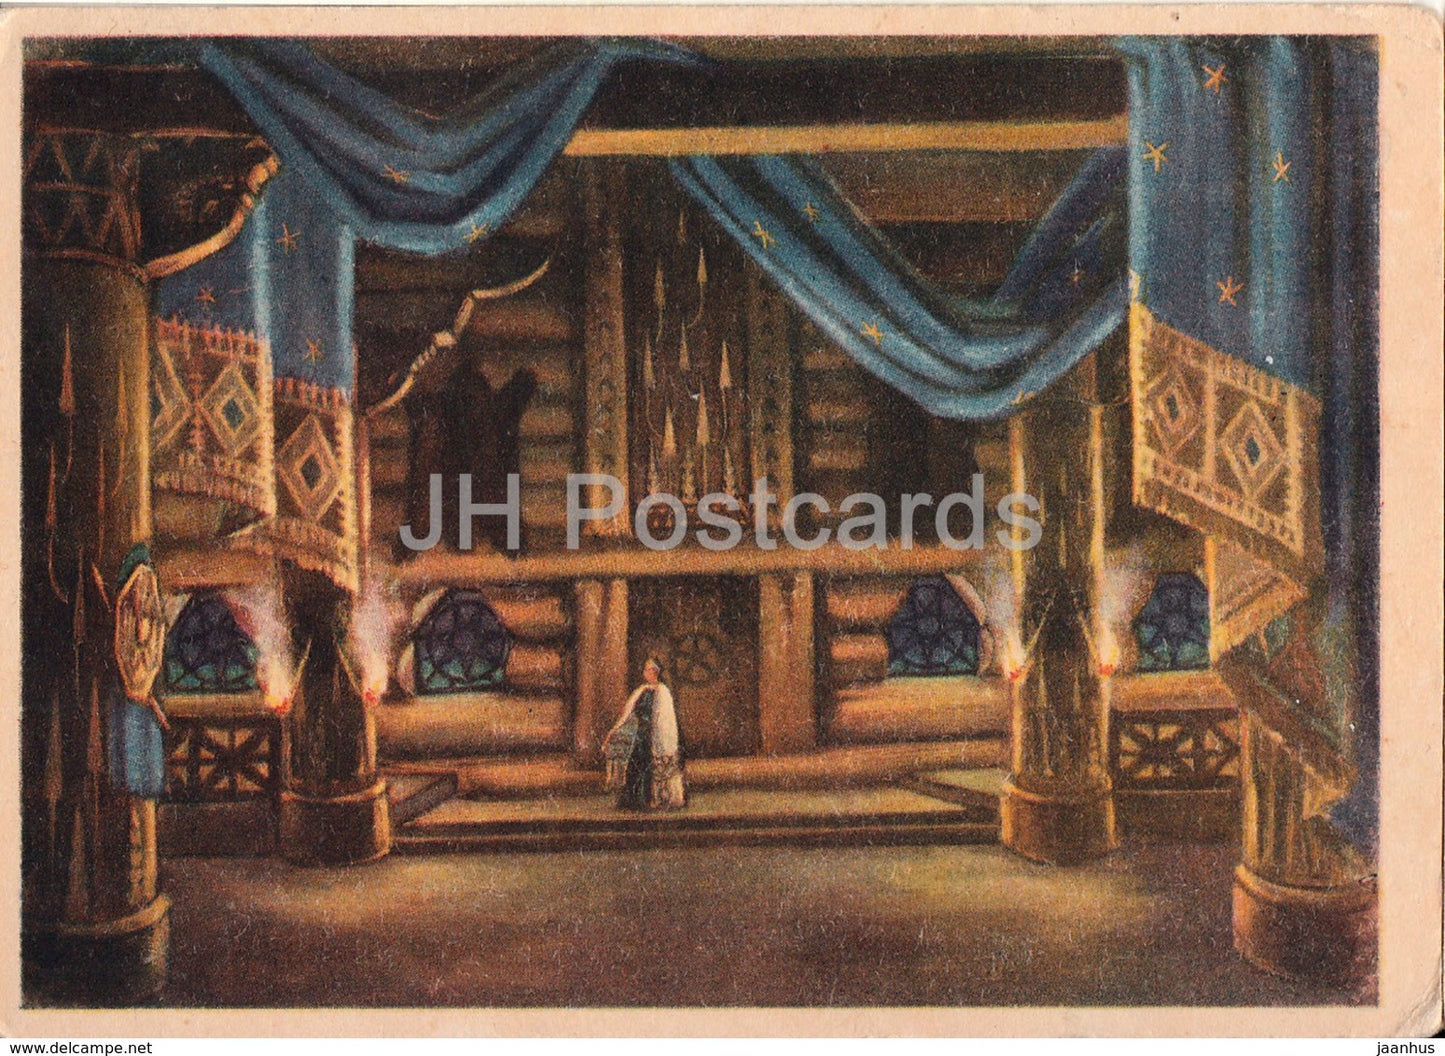 illustration by V. Haas - Kalev Farmstead - Scene from ballet of Kalevipoeg - 1948 - Estonia USSR - unused - JH Postcards